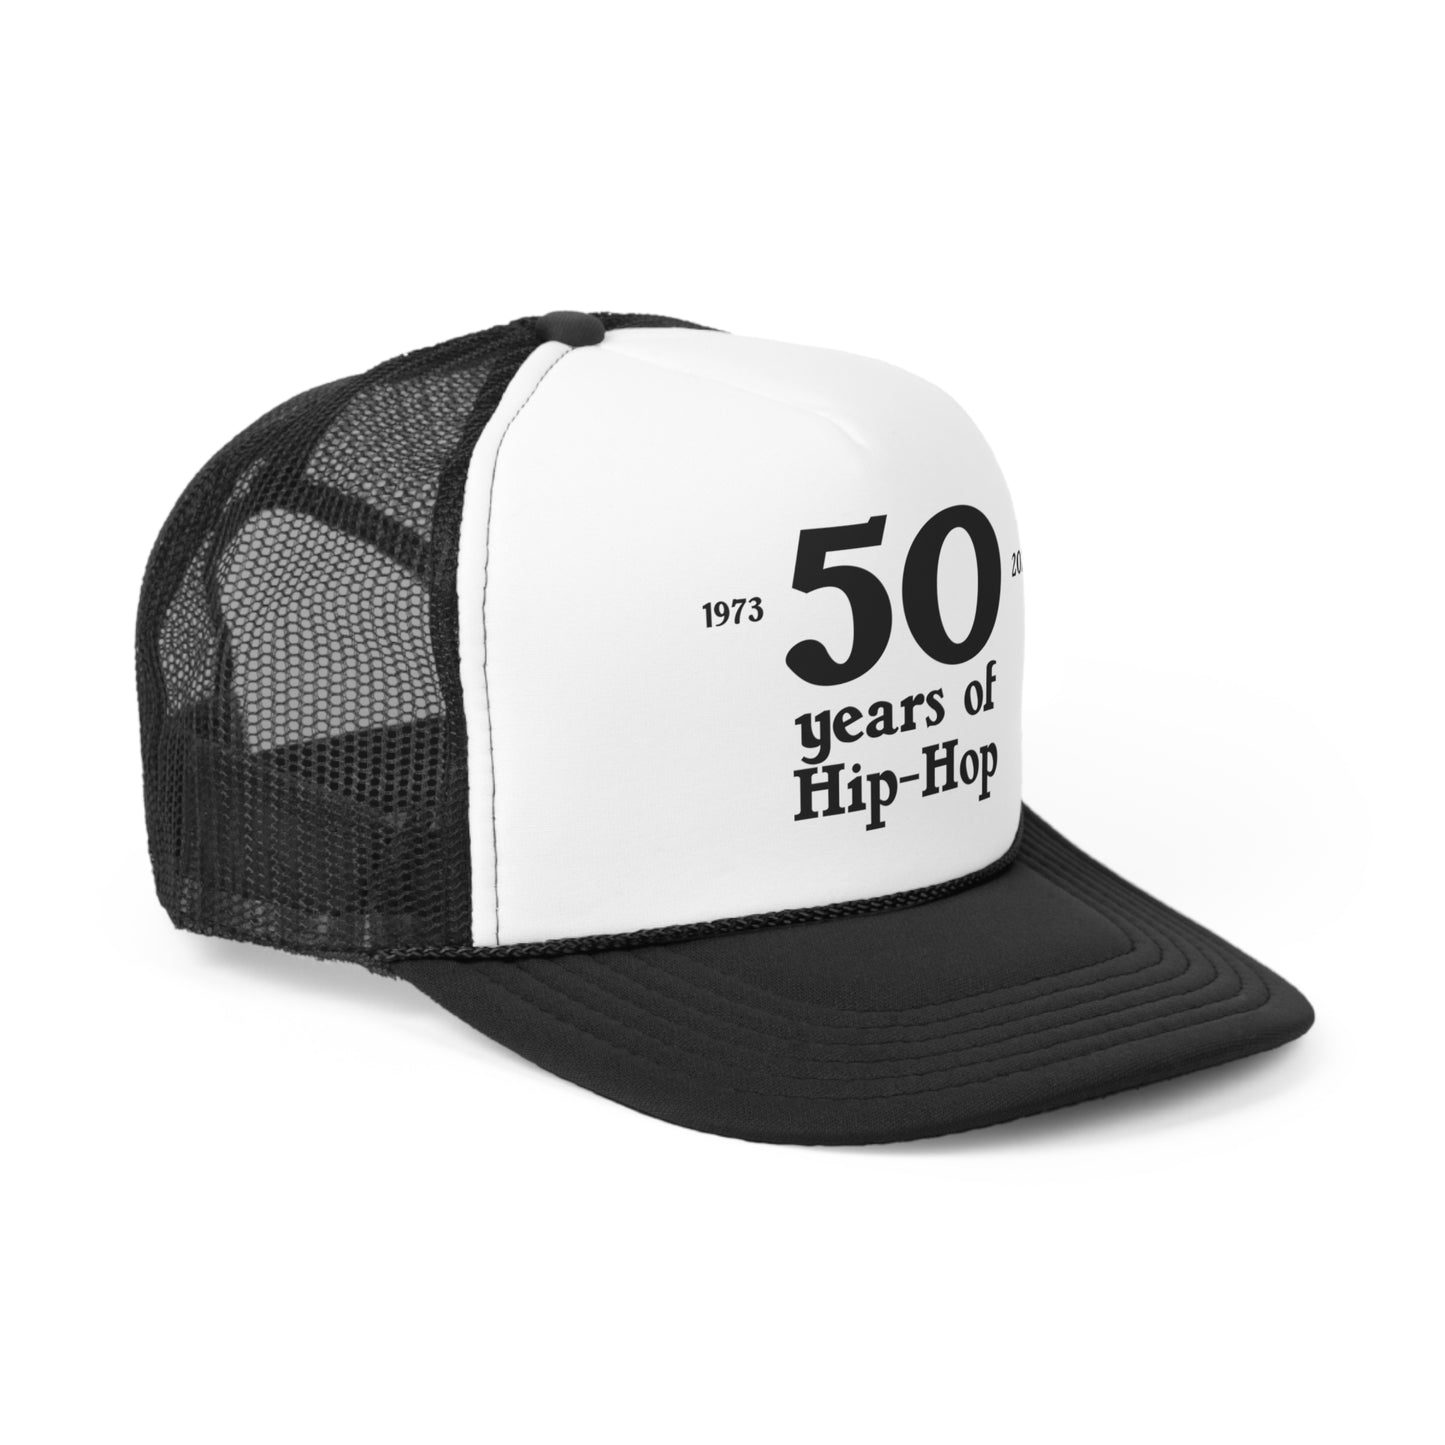 50 years of Hip-Hop Snapback Trucker Hat Great gift for a Hip-Hop & Rap lover, 50 years of Hip-Hop Hat